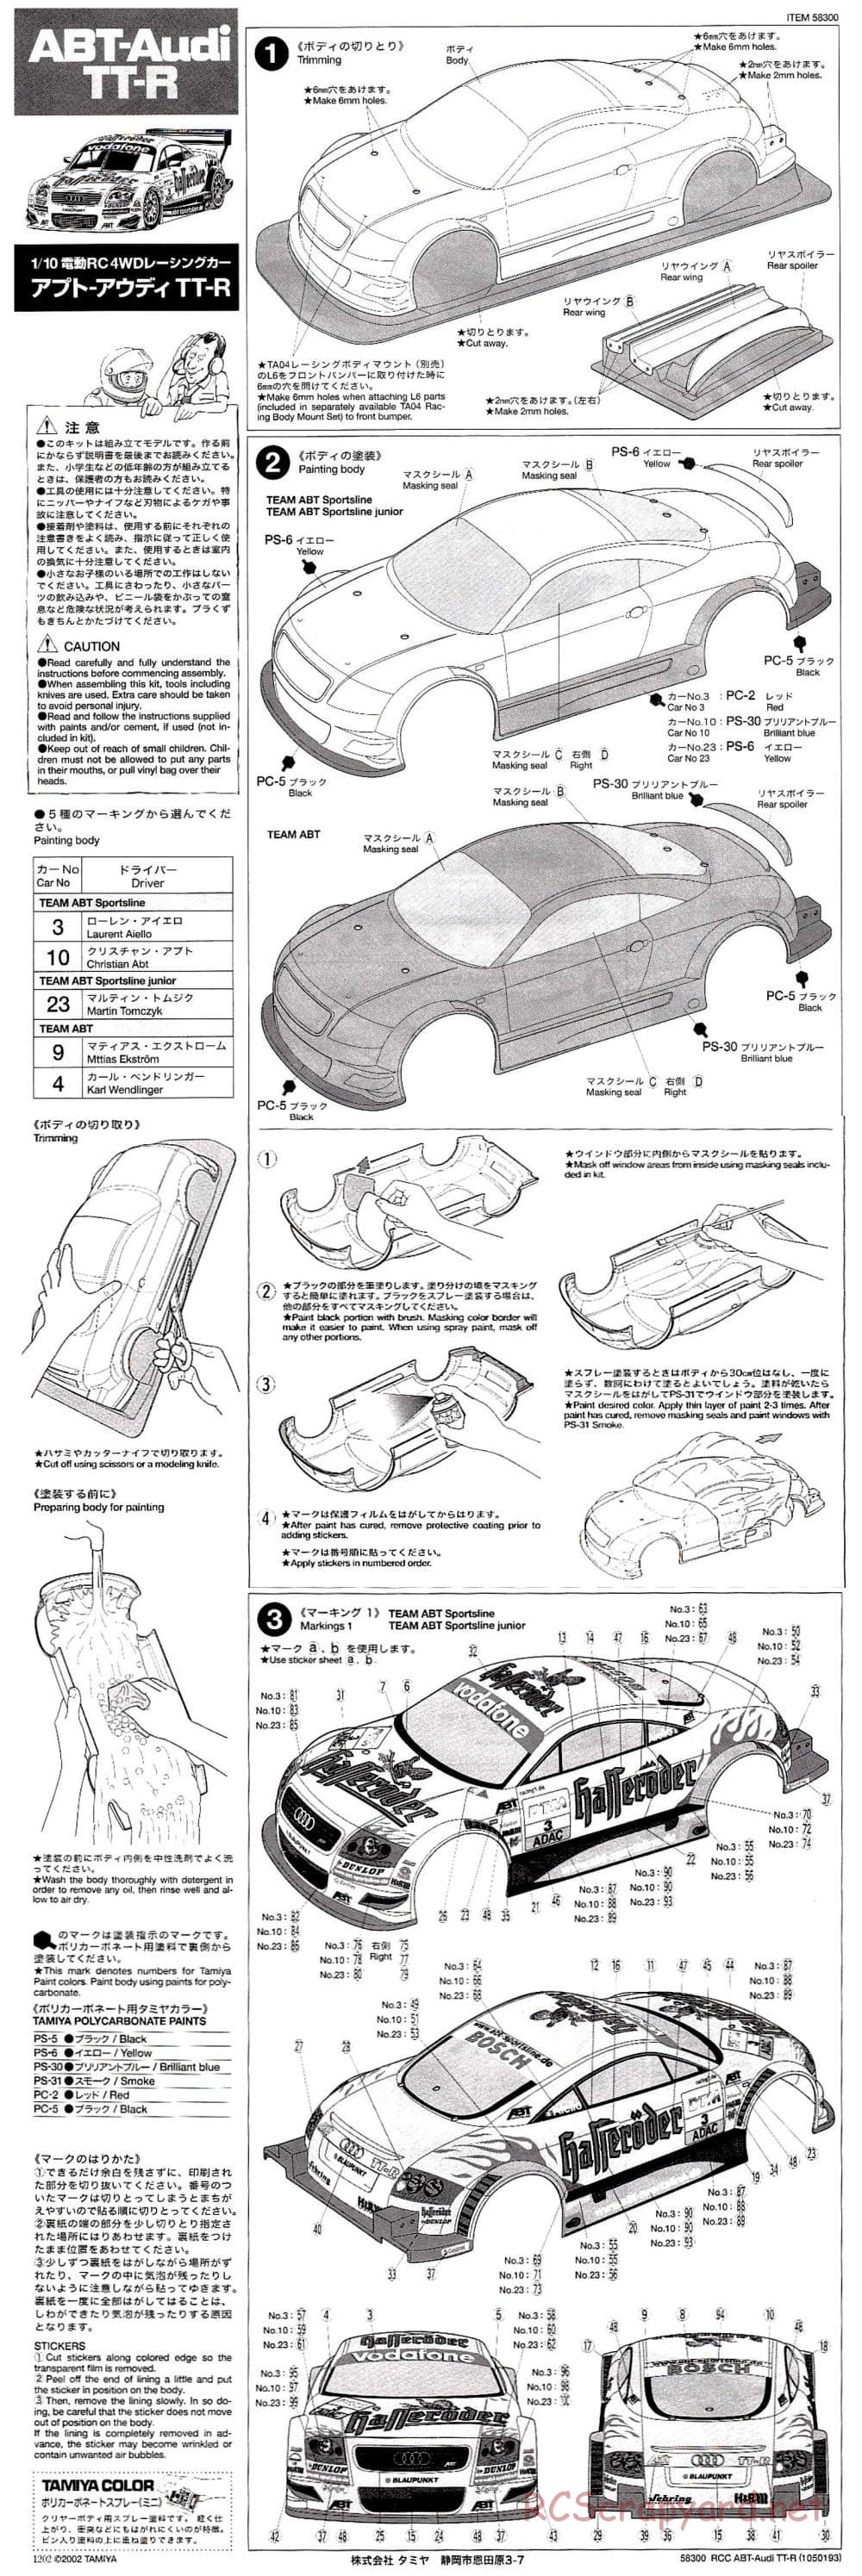 Tamiya - ABT Audi TT-R - TA04-SS Chassis - Body Manual - Page 1